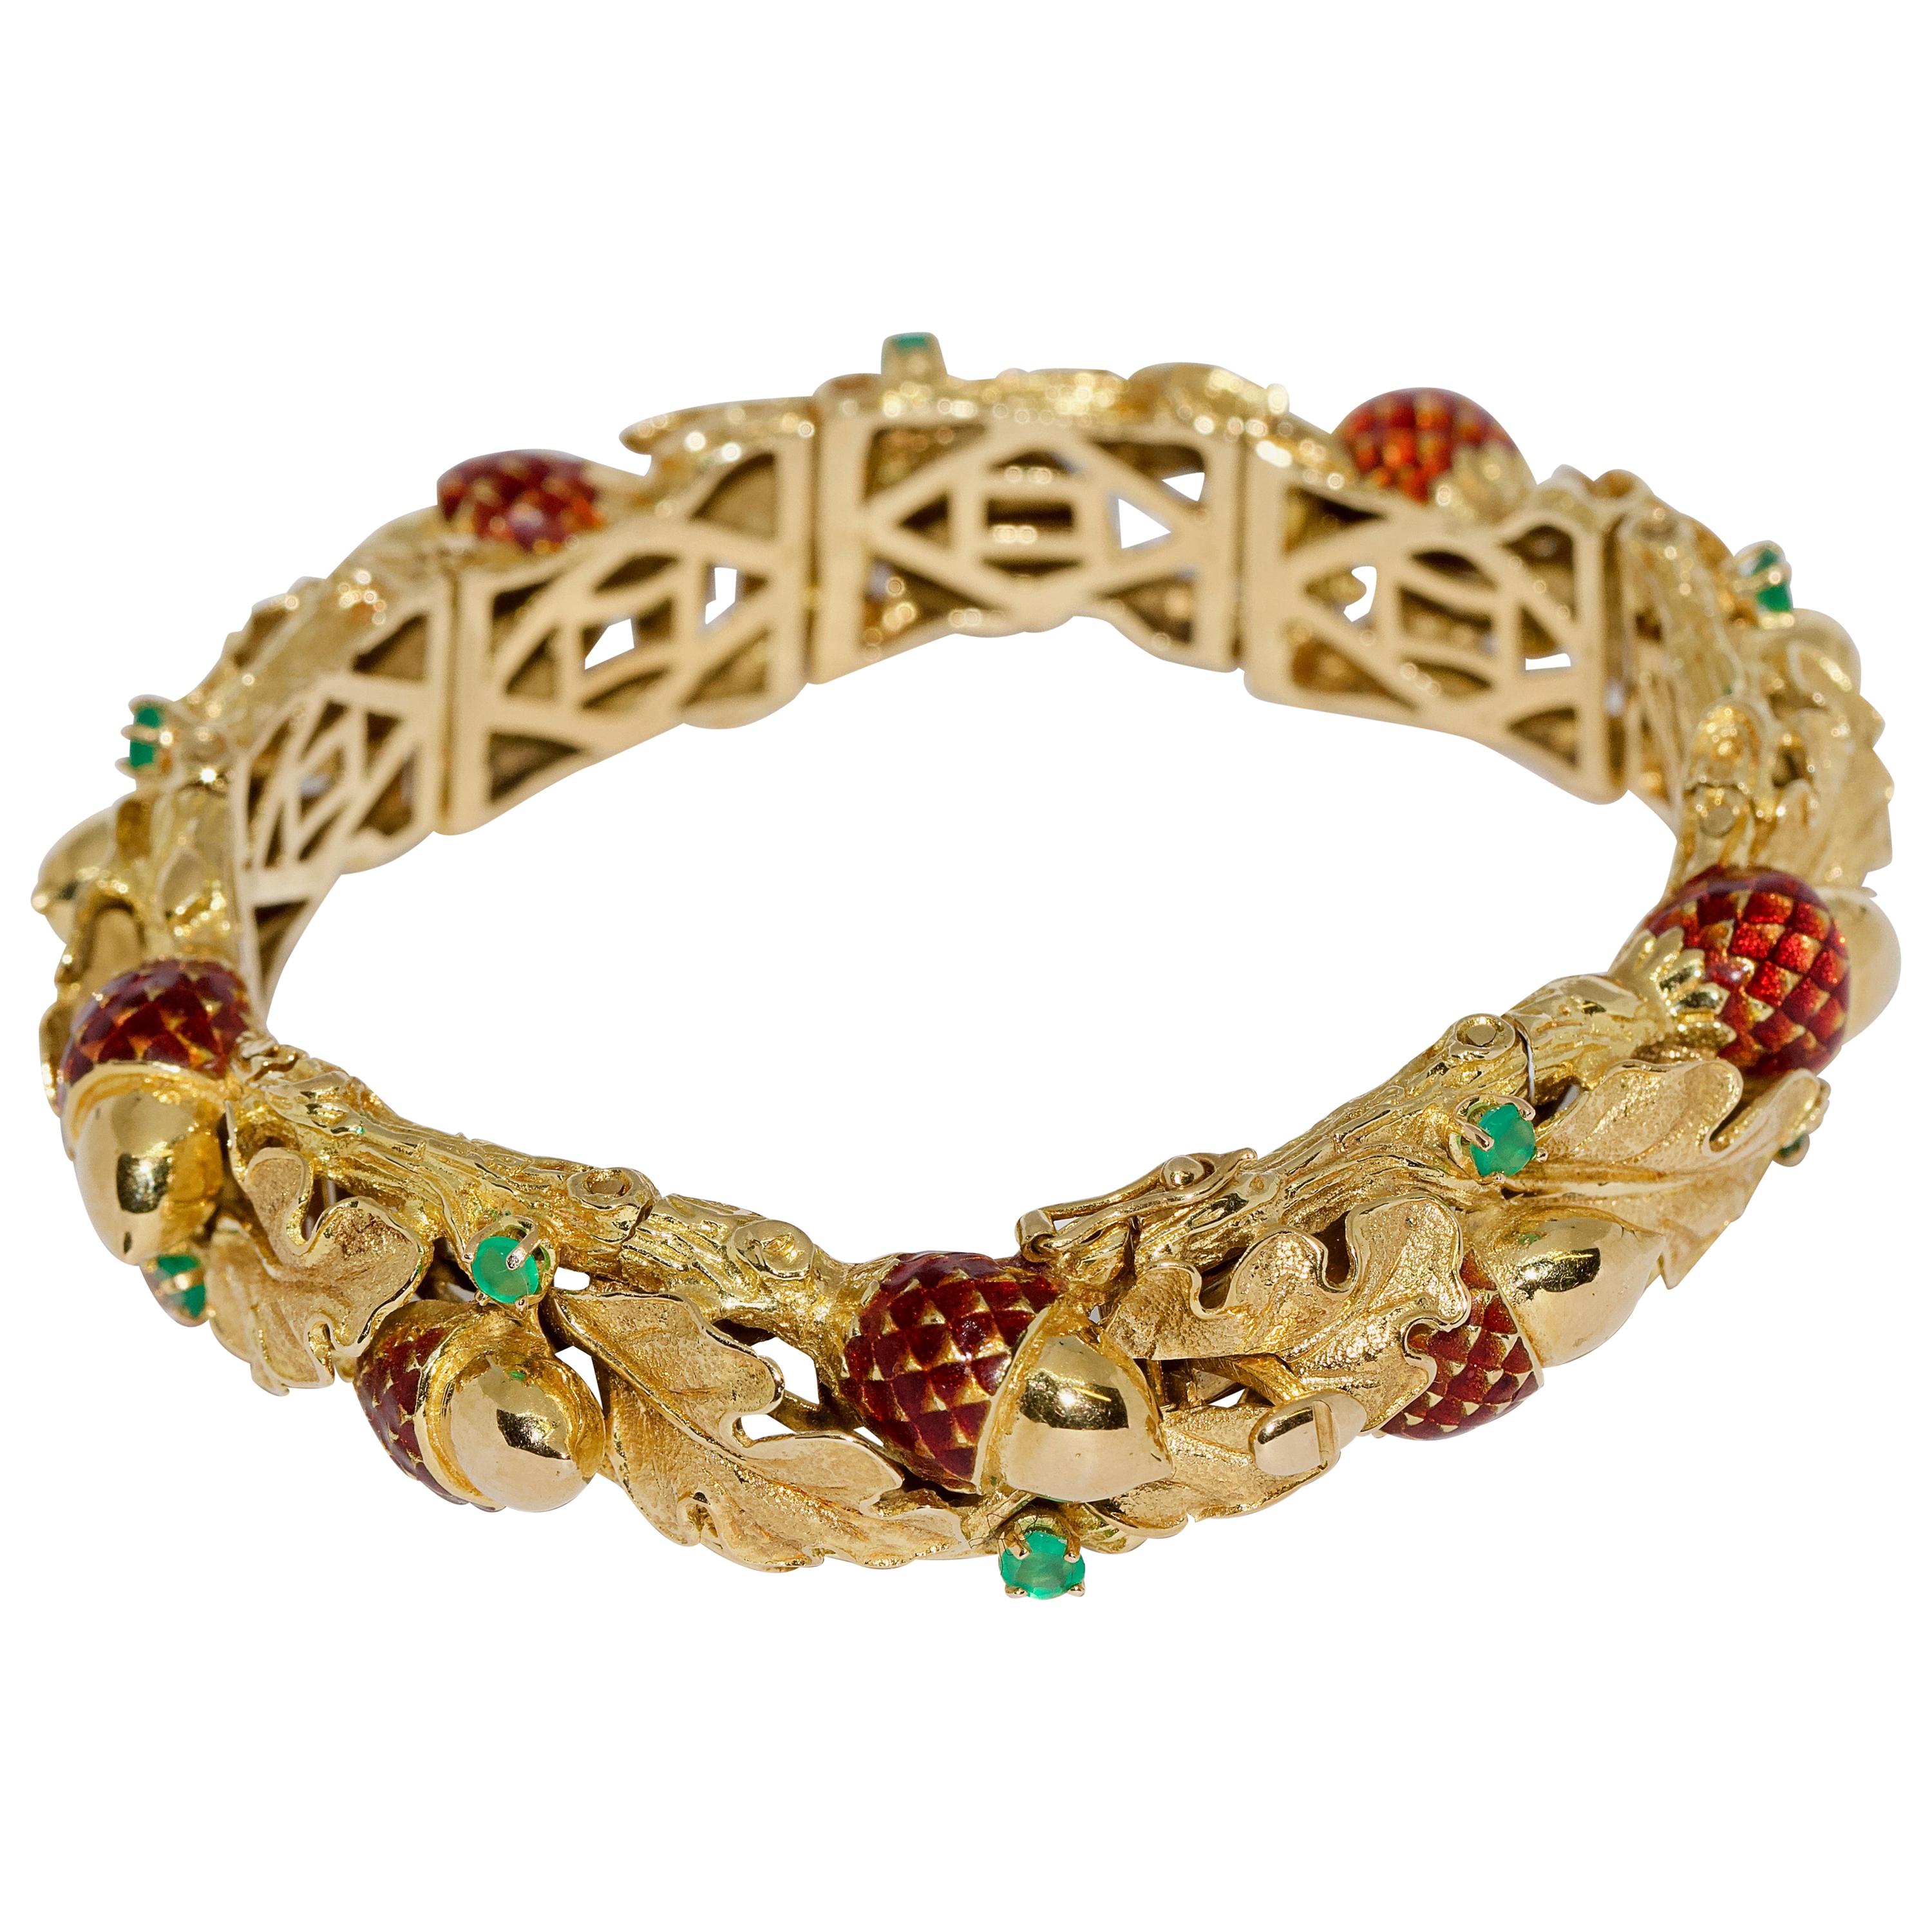 Ladies Bracelet, Bangle in 18 Karat Gold, with Enamel Acorns and Emeralds